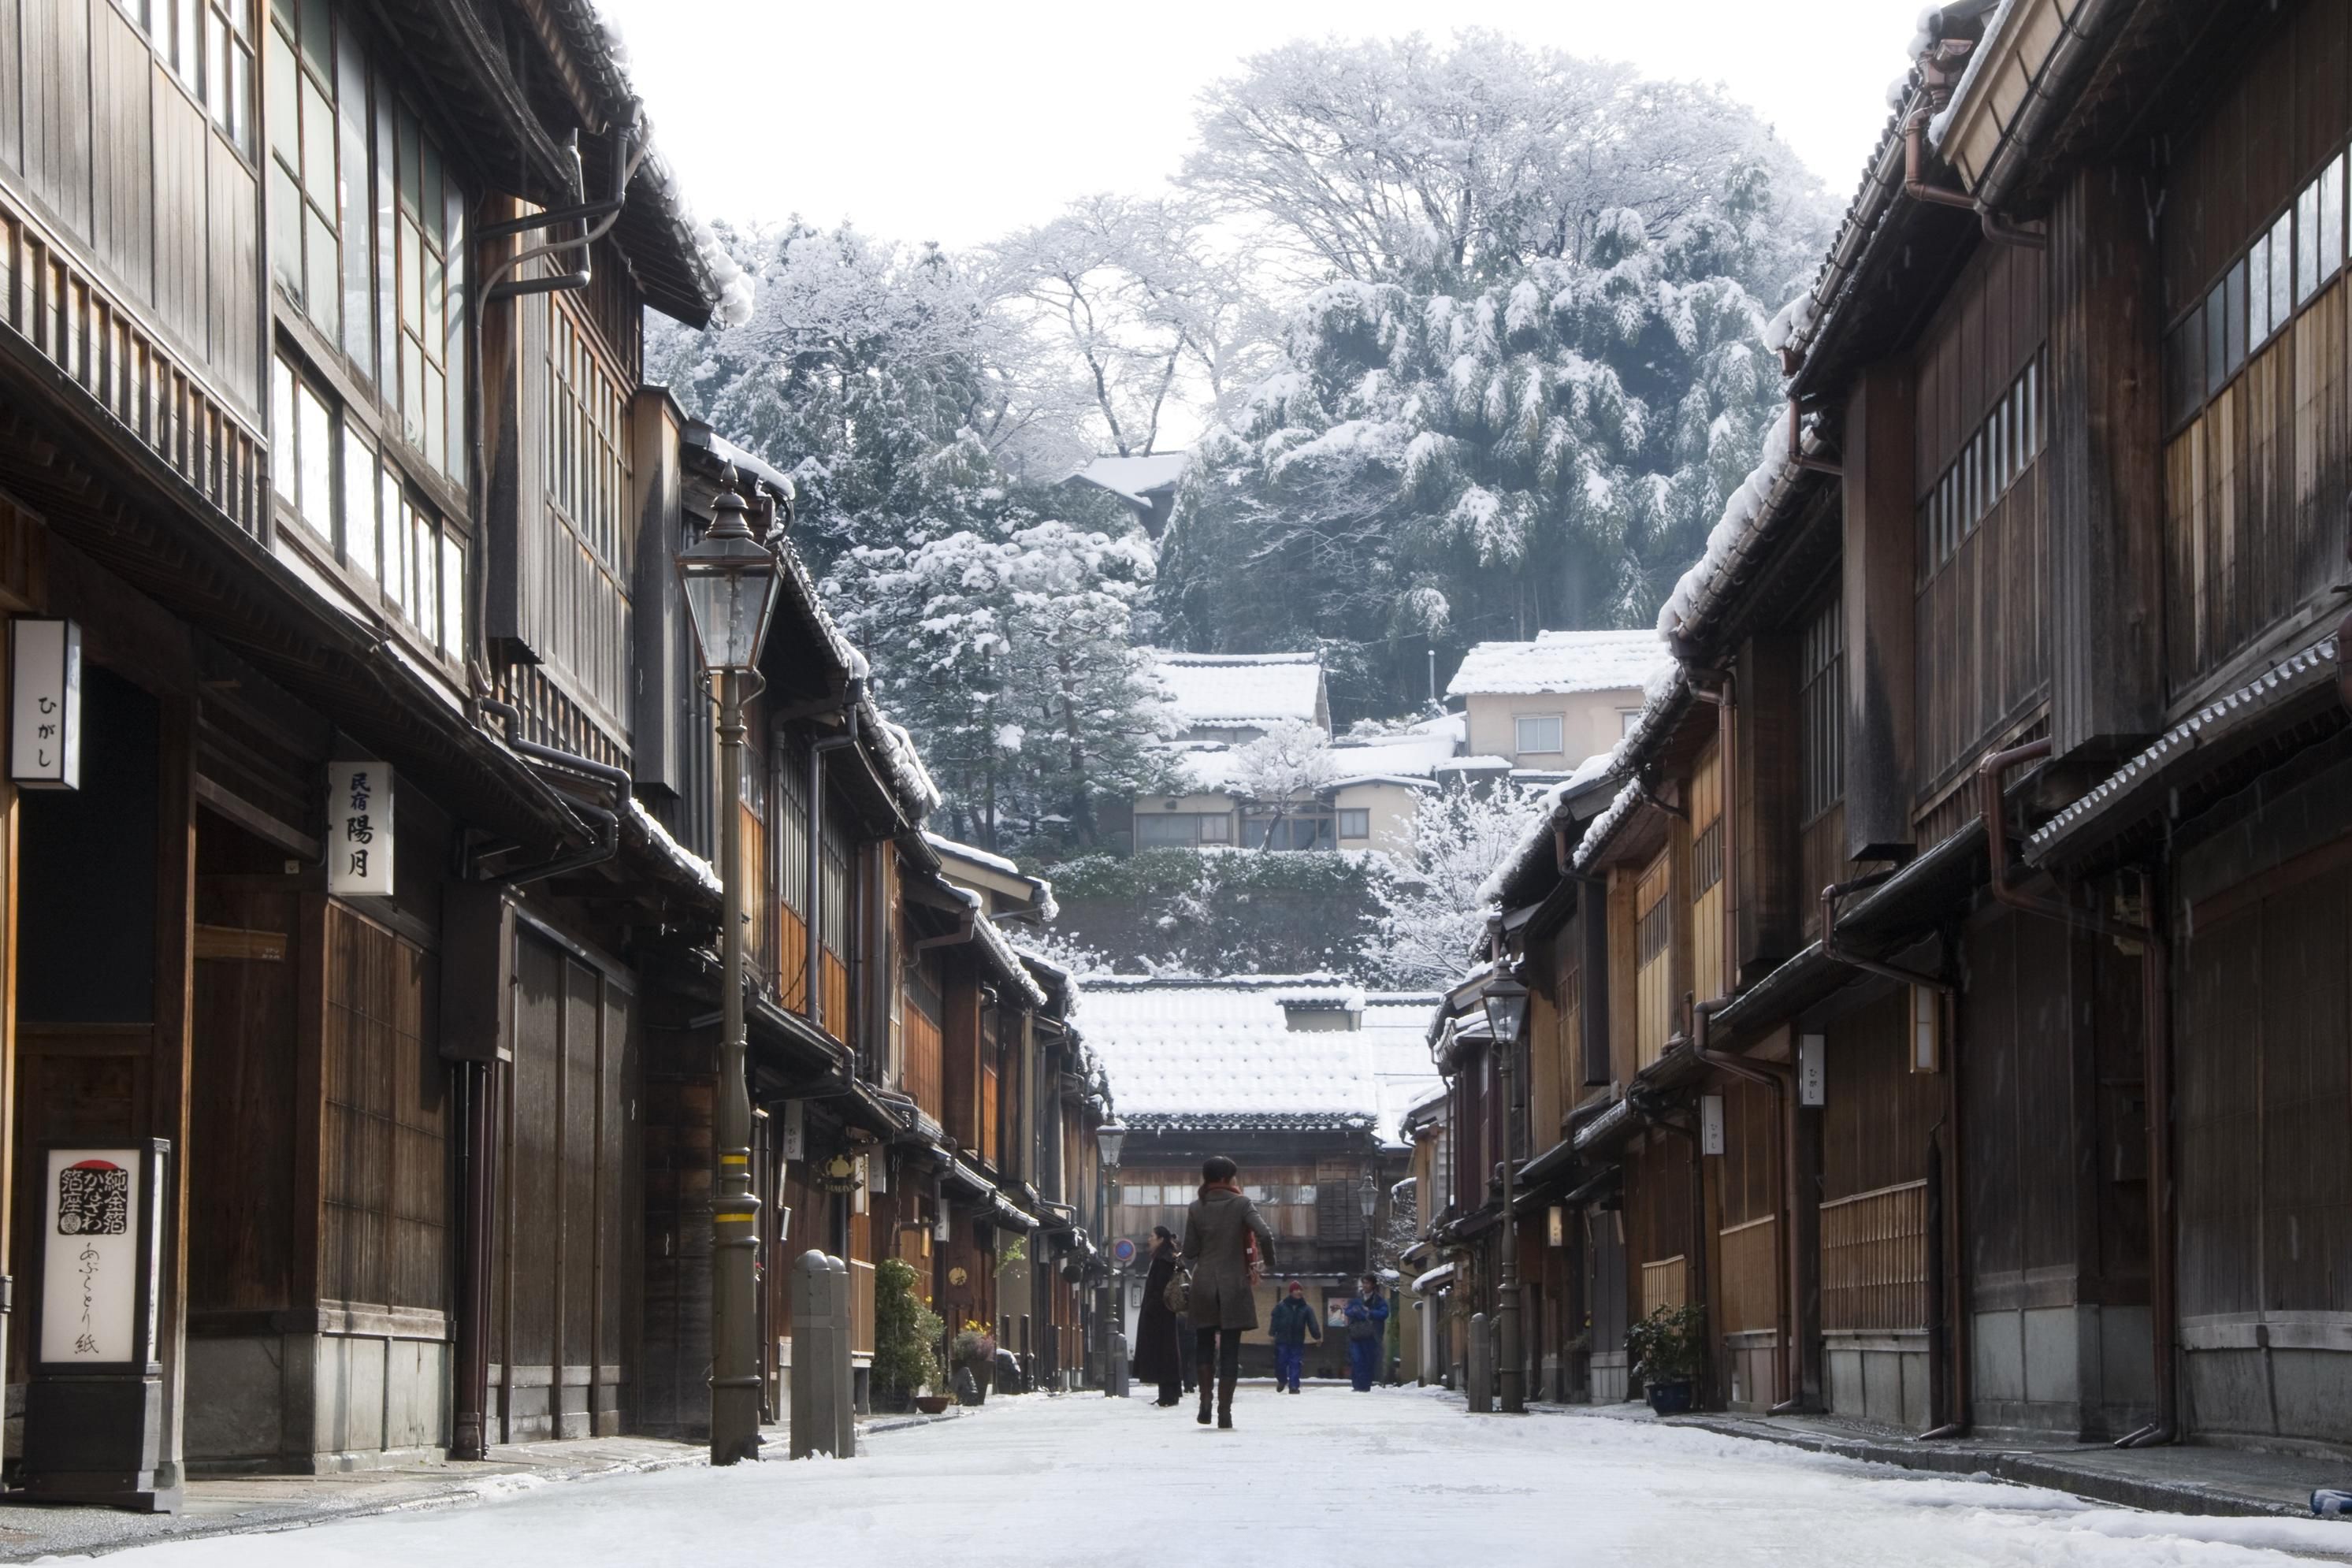 Higashi Chaya District (Winter)